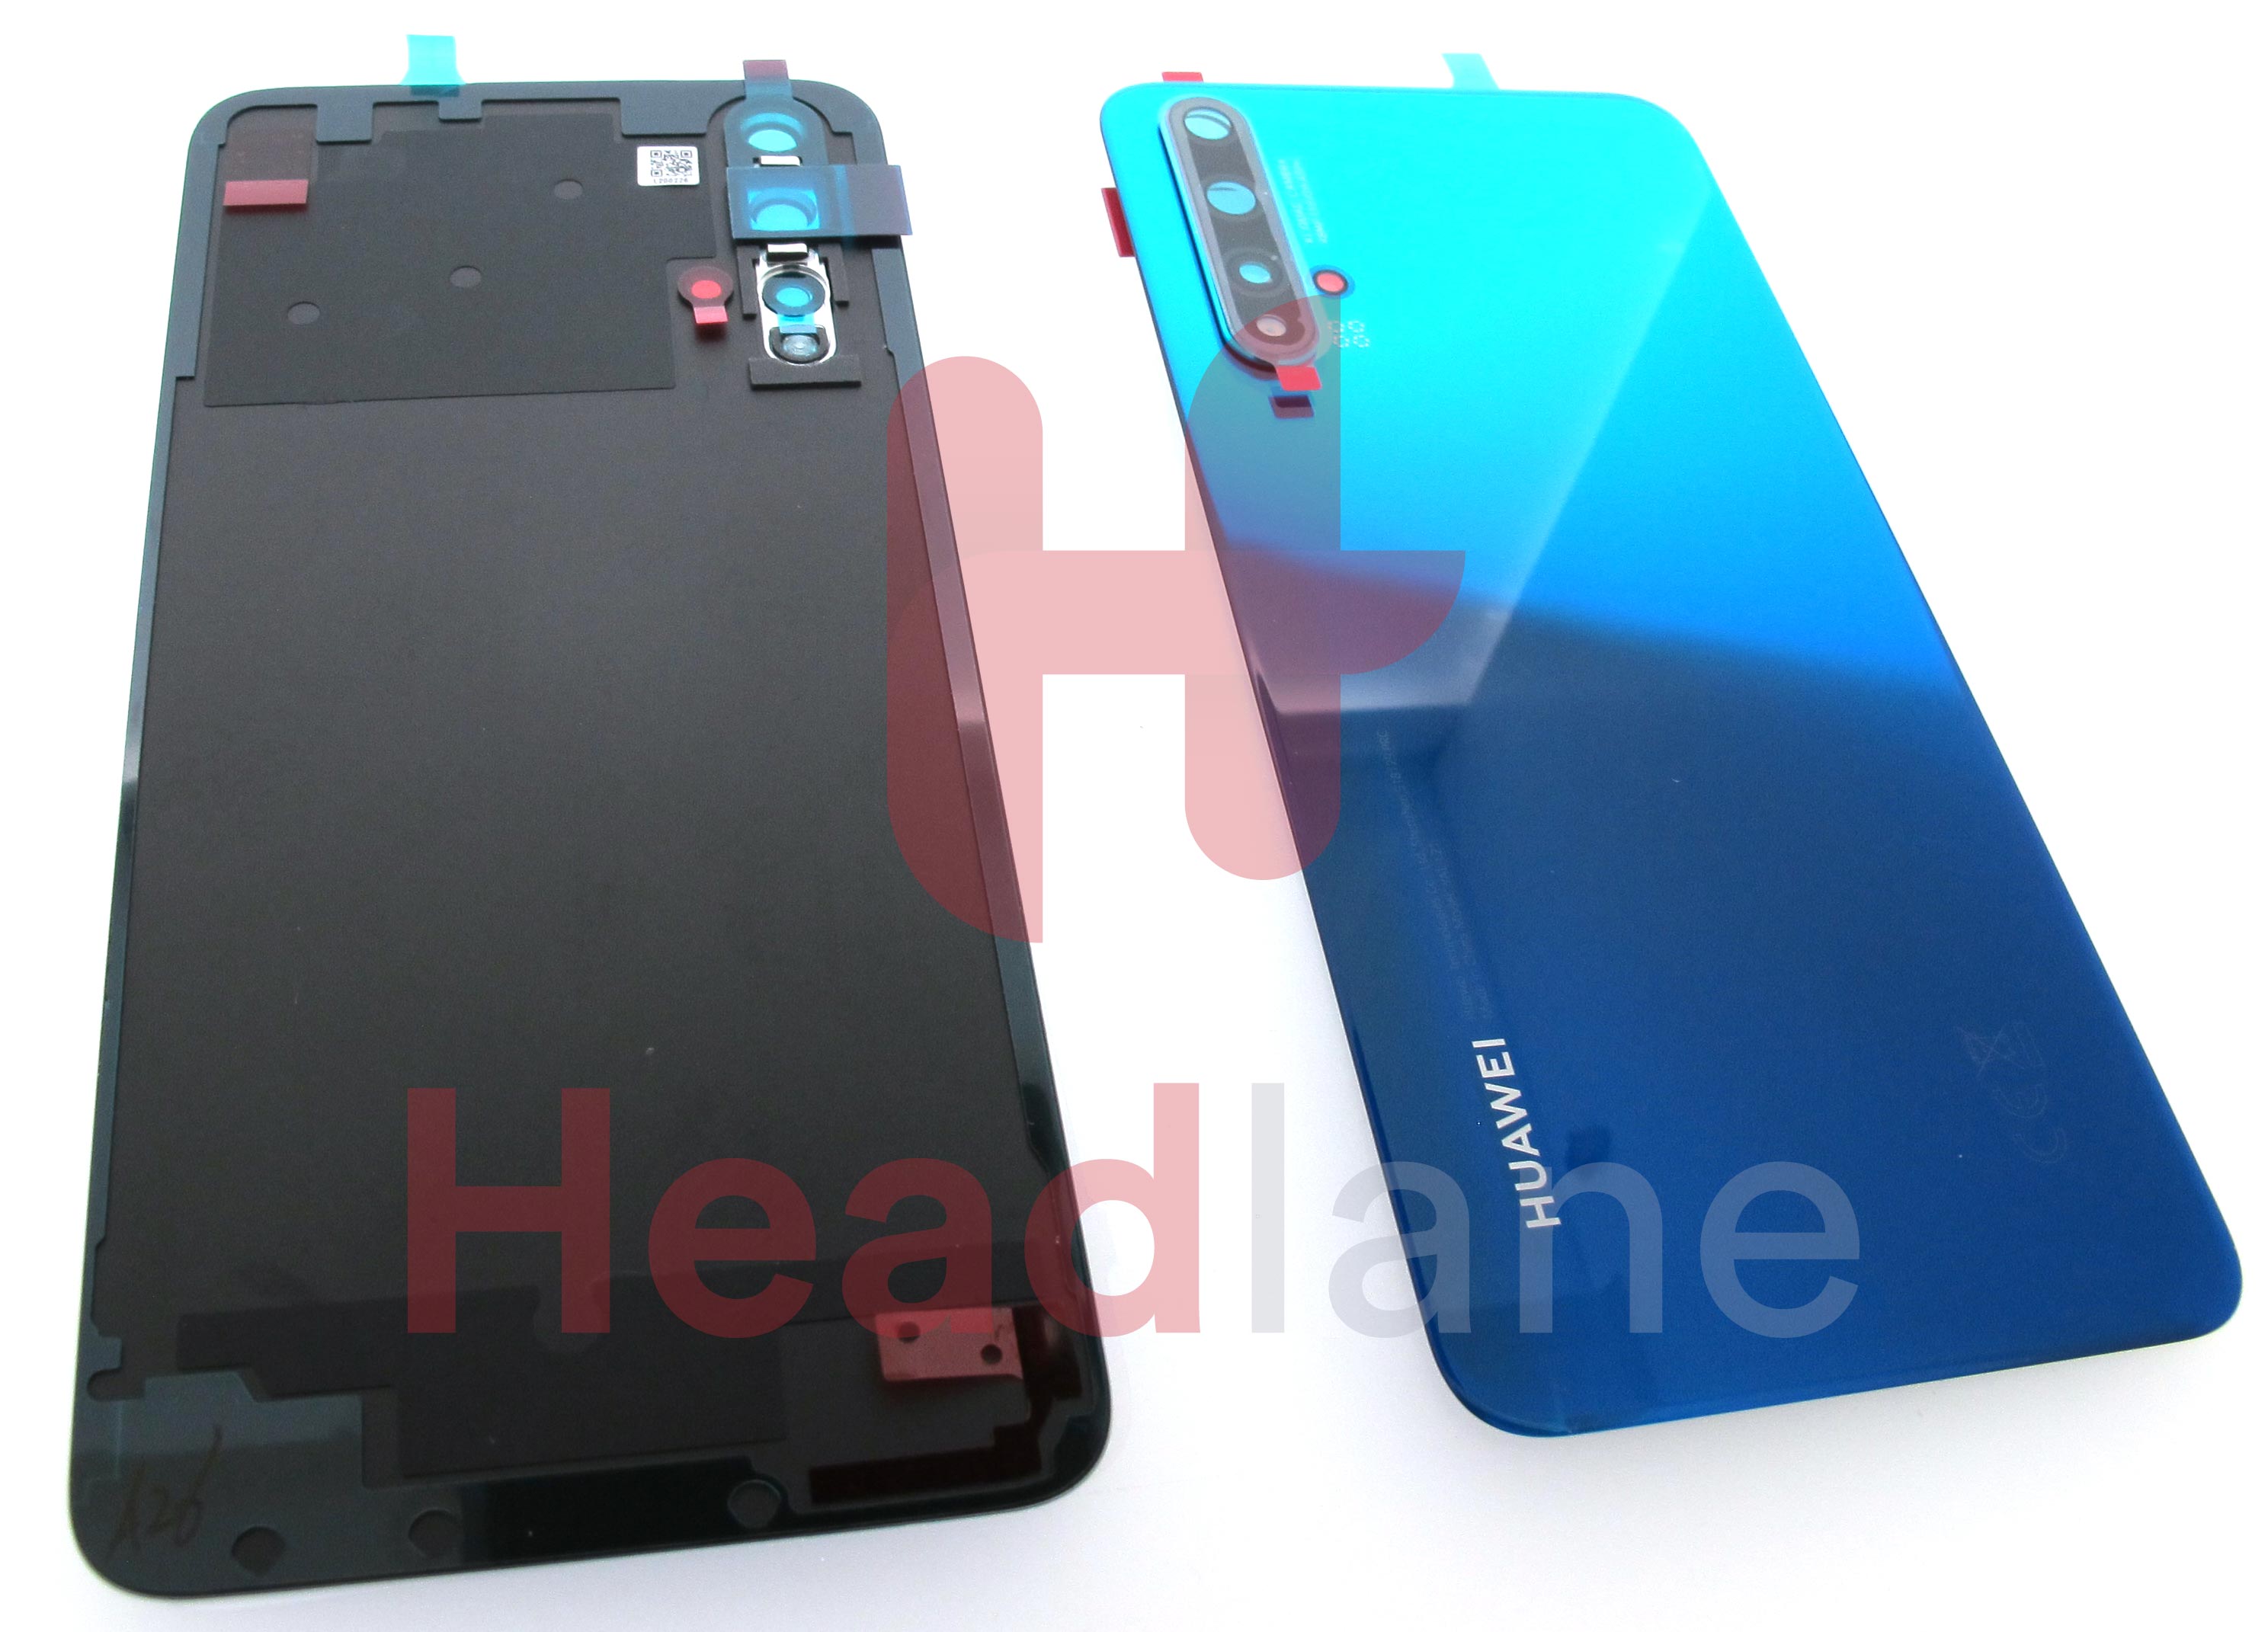 Huawei Nova 5T Back / Battery Cover - Blue